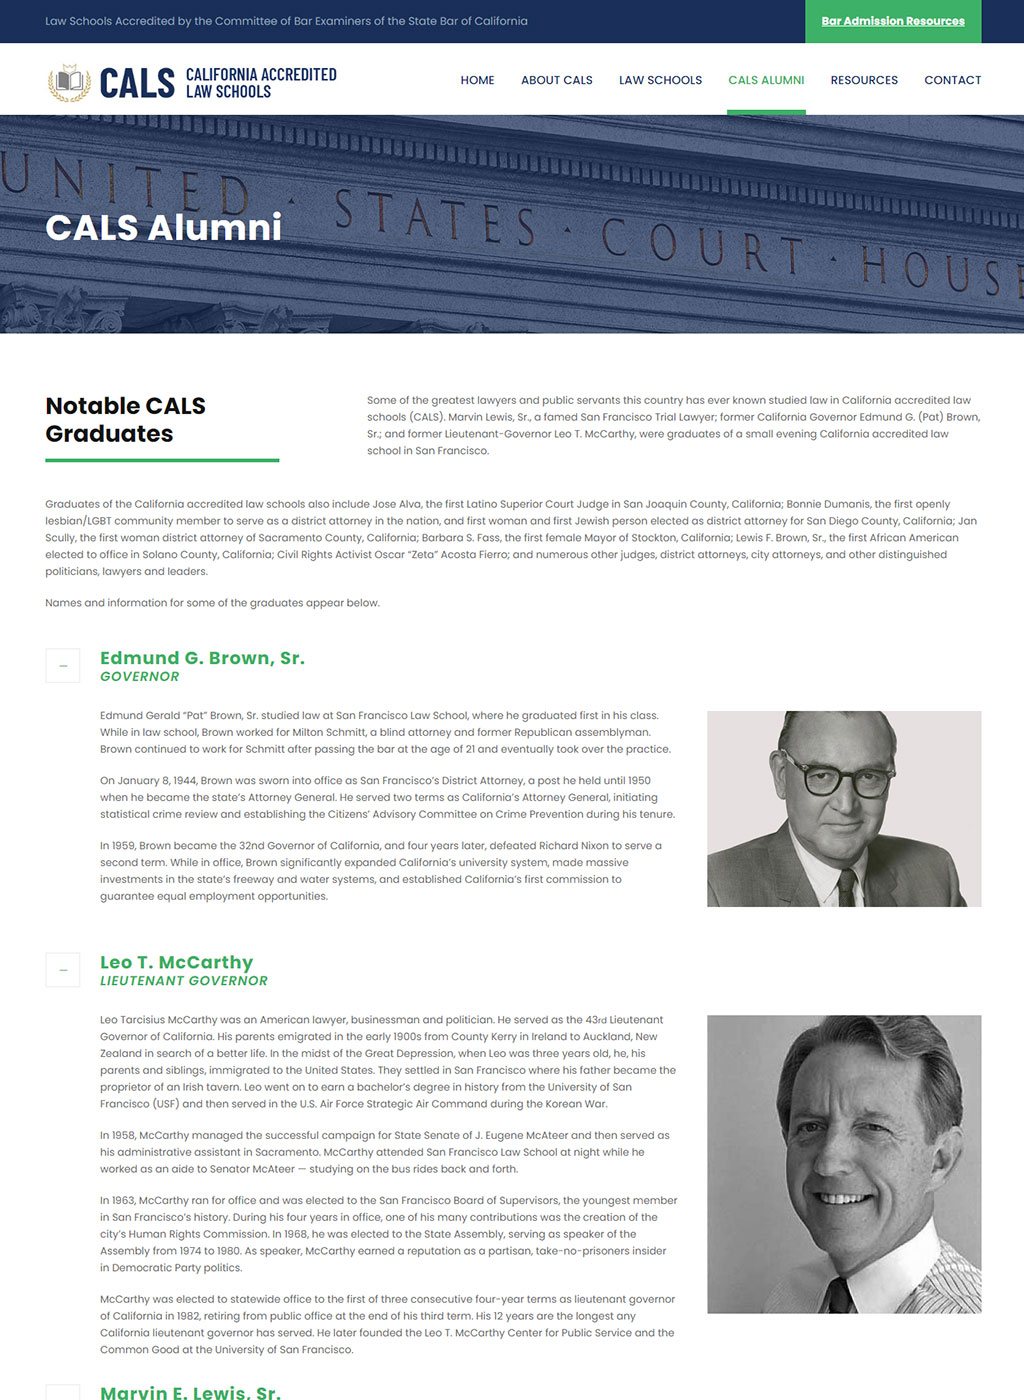 Web development for California Accredited Law Schools (CALS)